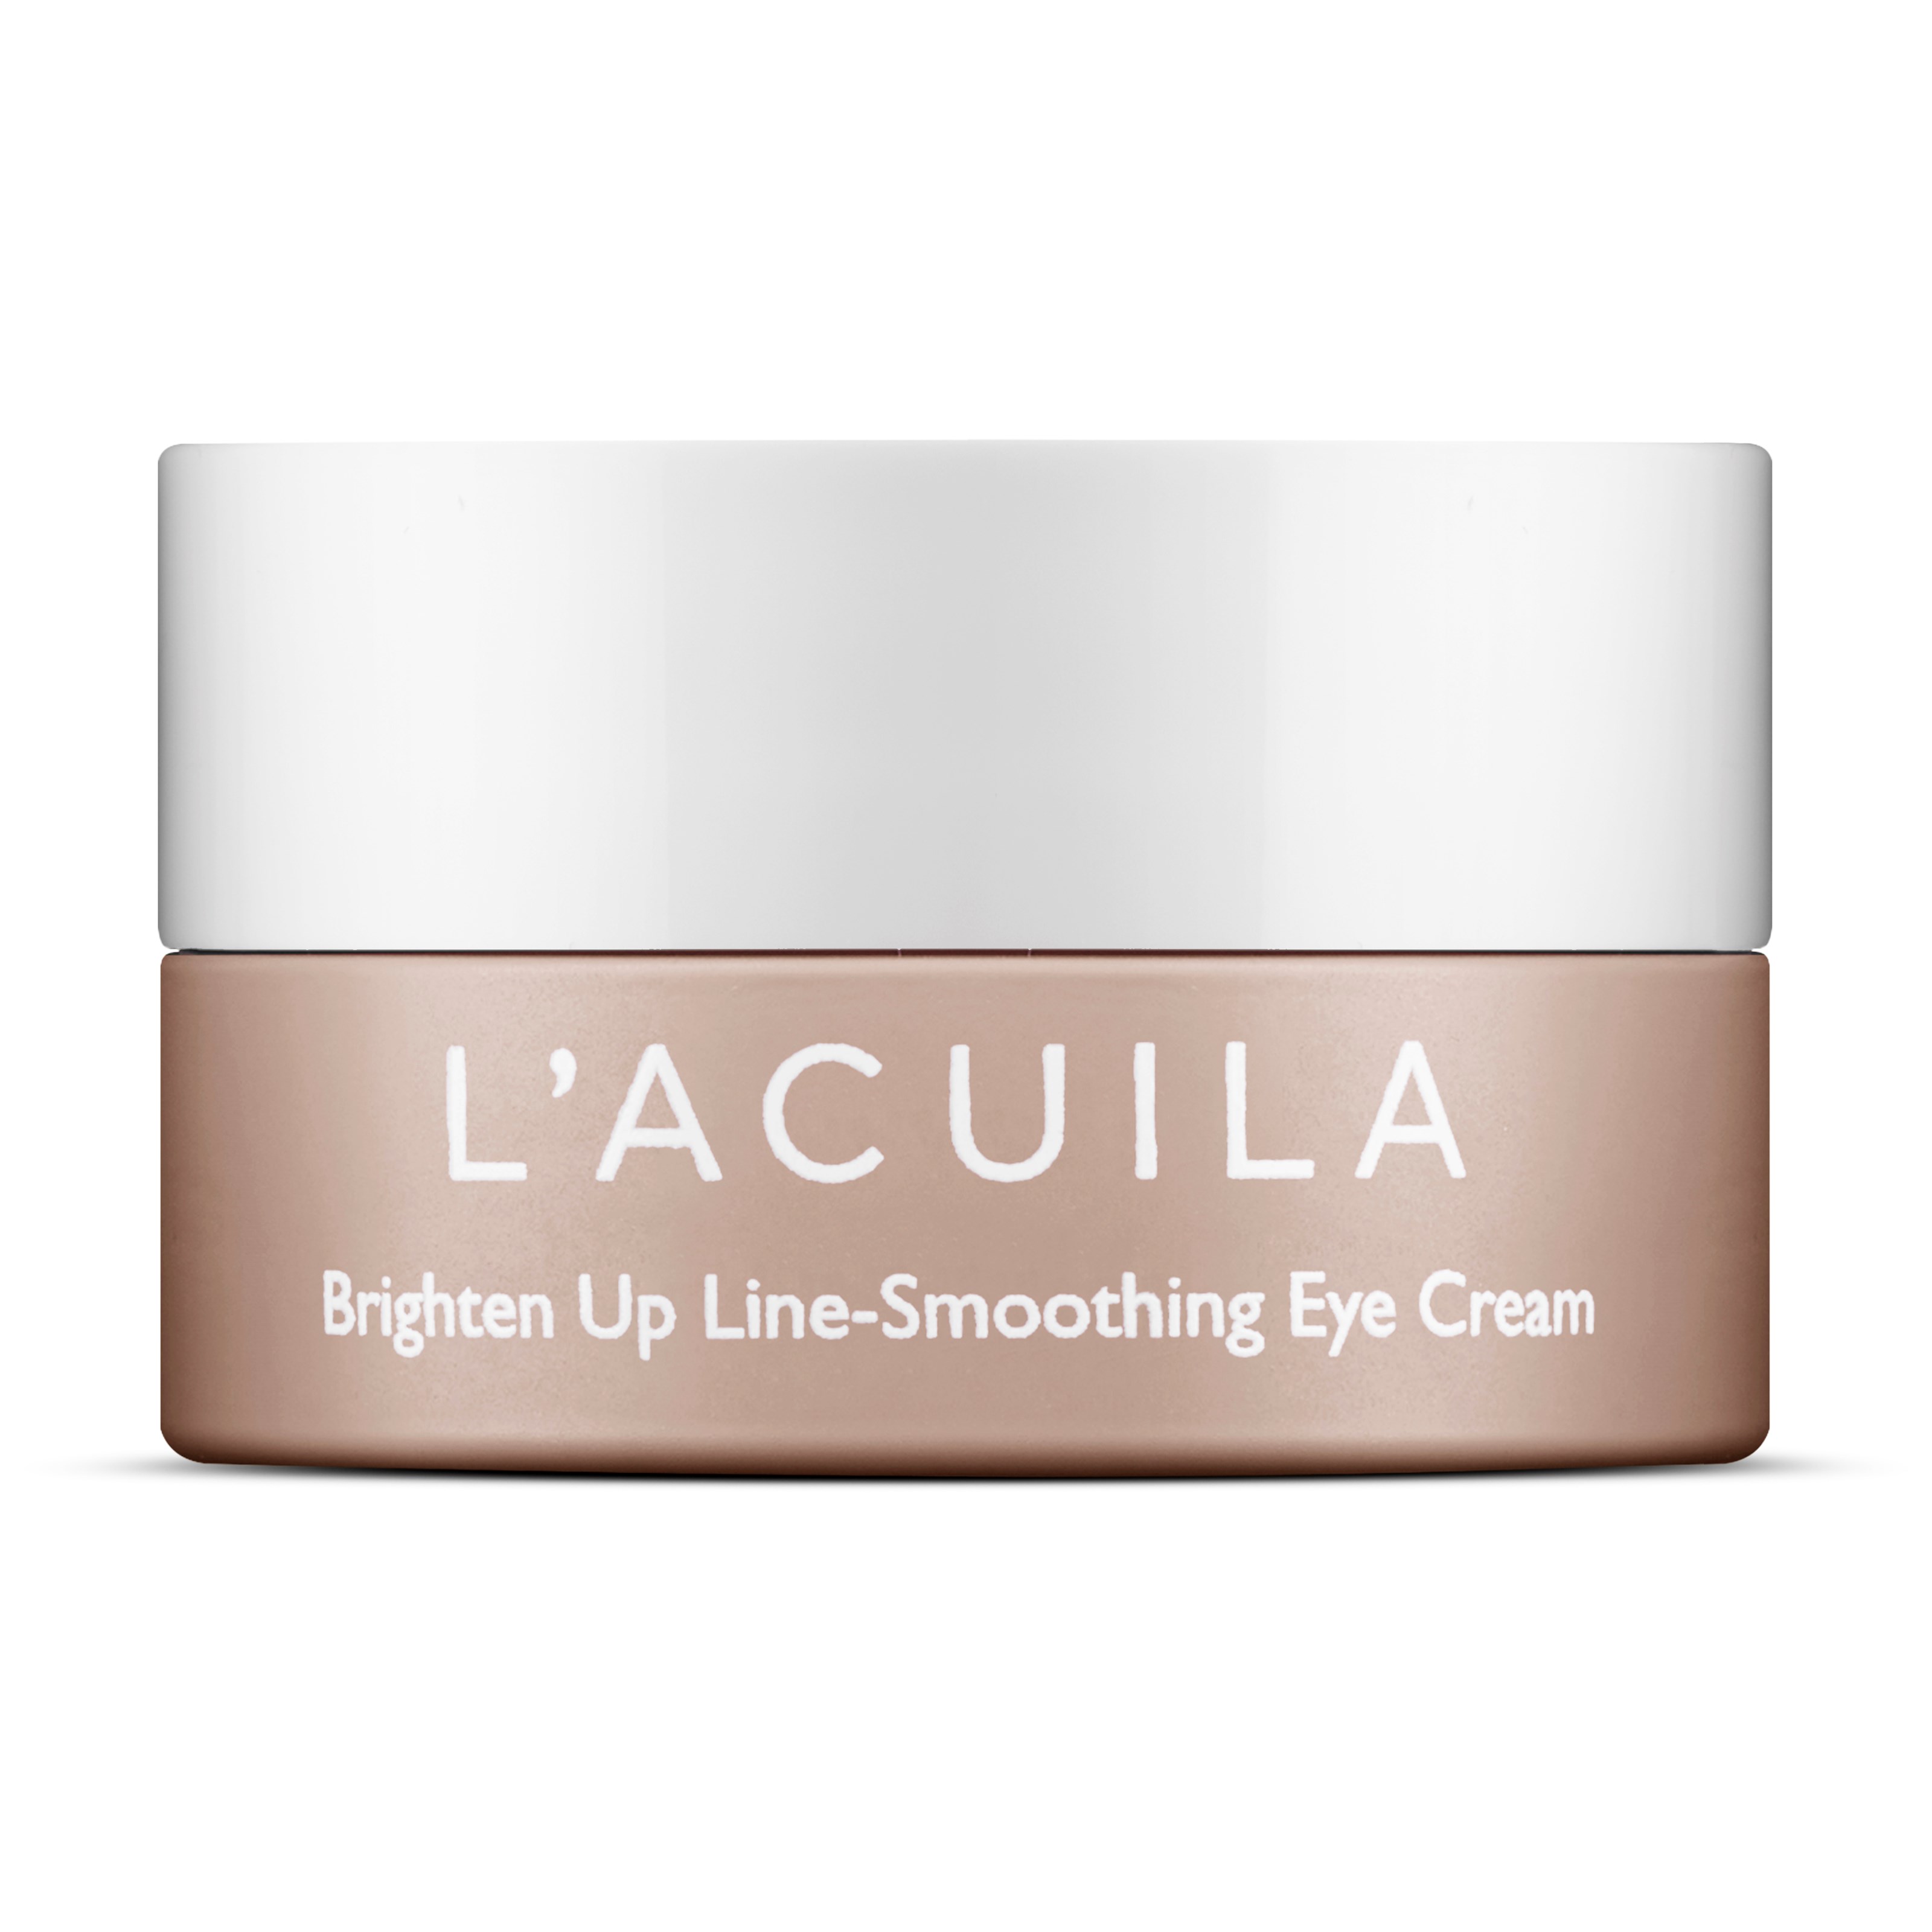 LAcuila Brighten Up Line-Smoothing Eye Cream 15 ml